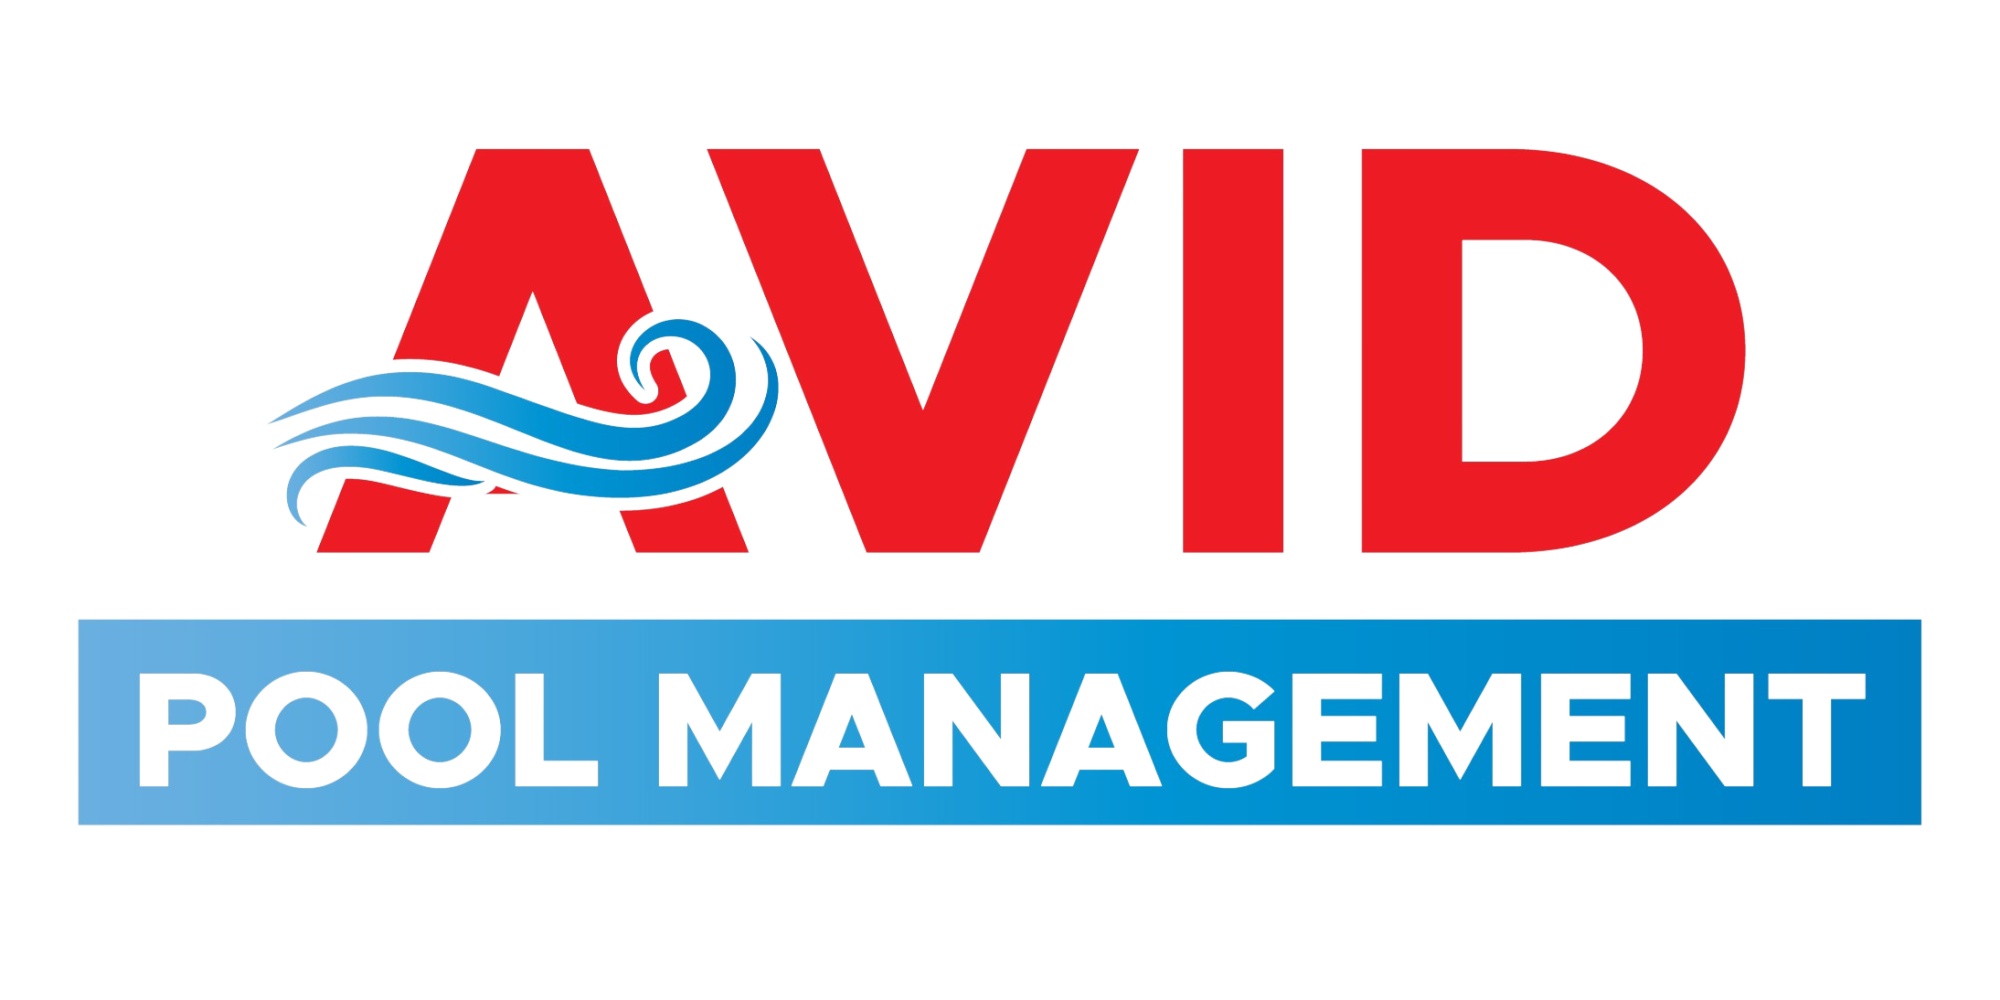 Avid_Pool_Logo-removebg